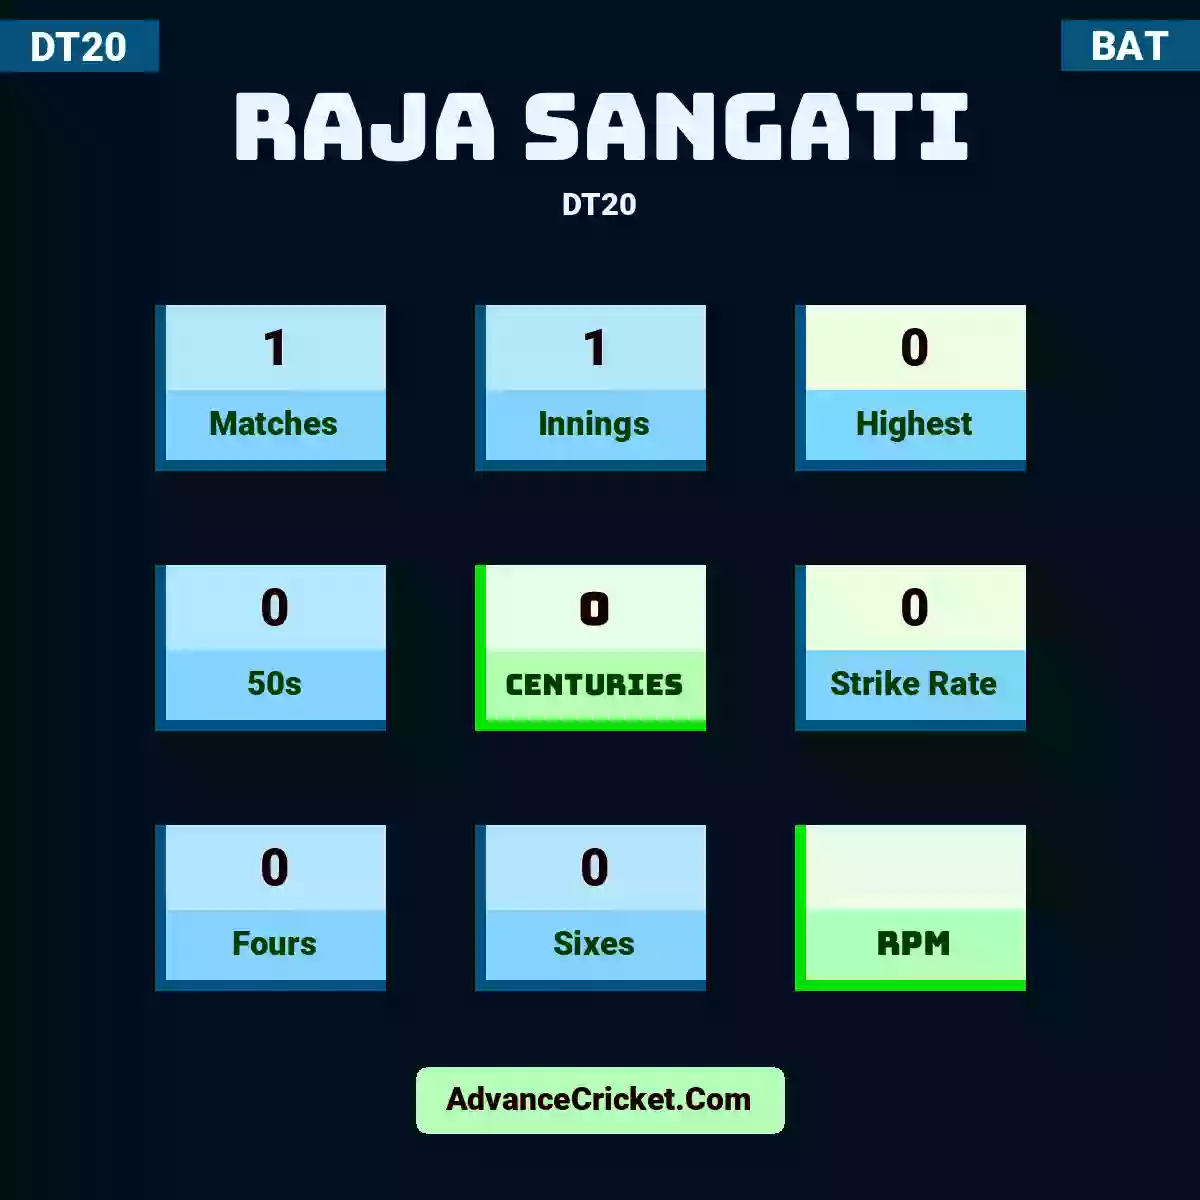 Raja Sangati DT20 , Raja Sangati played 1 matches, scored 0 runs as highest, 0 half-centuries, and 0 centuries, with a strike rate of 0. R.Sangati hit 0 fours and 0 sixes.